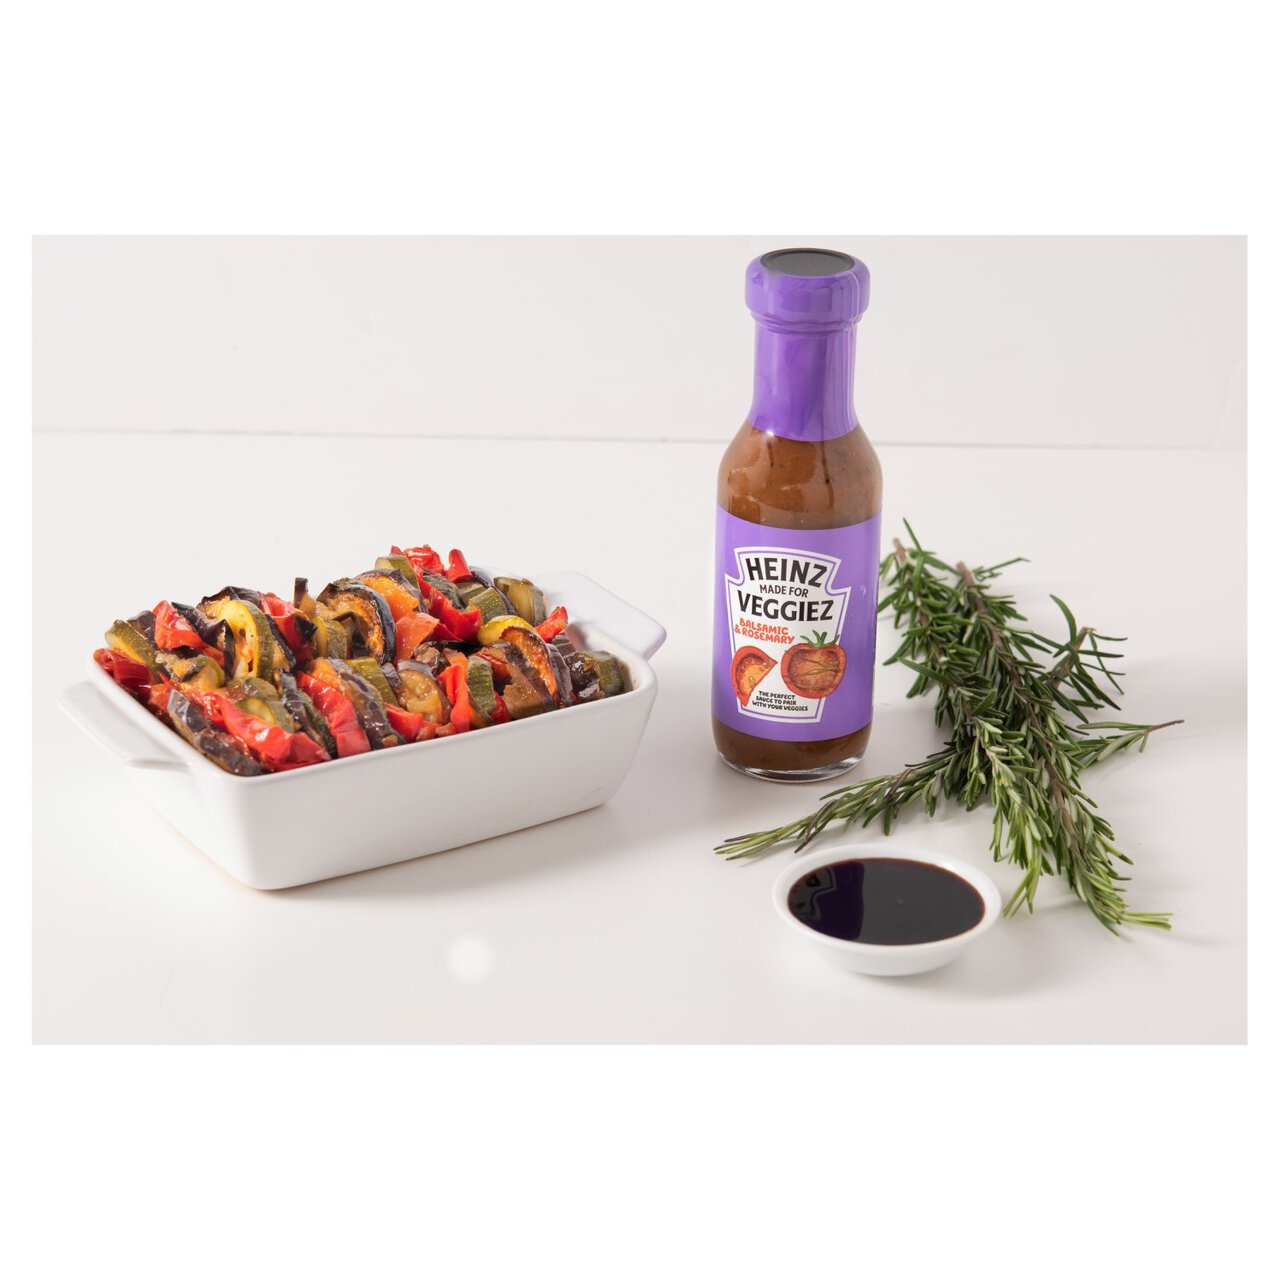 Heinz Made for Veggies - Balsamic & Rosemary Salad Dressing 250ml